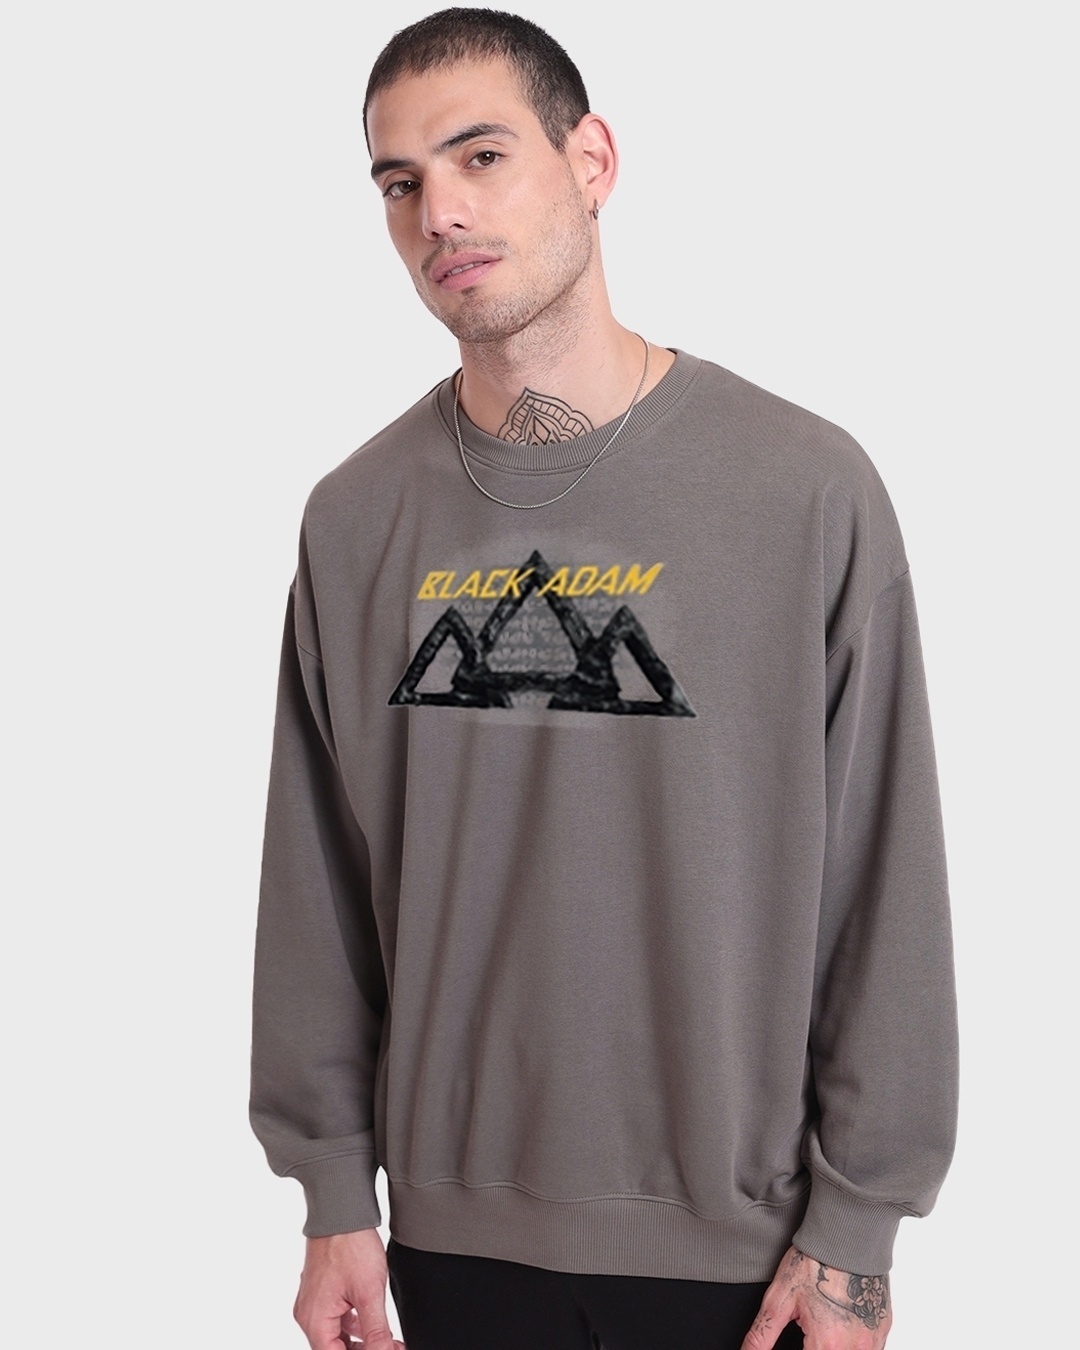 Shop Men's Grey The Time of Heroes is over : Black Adam Graphic Printed Oversized Sweatshirt-Back